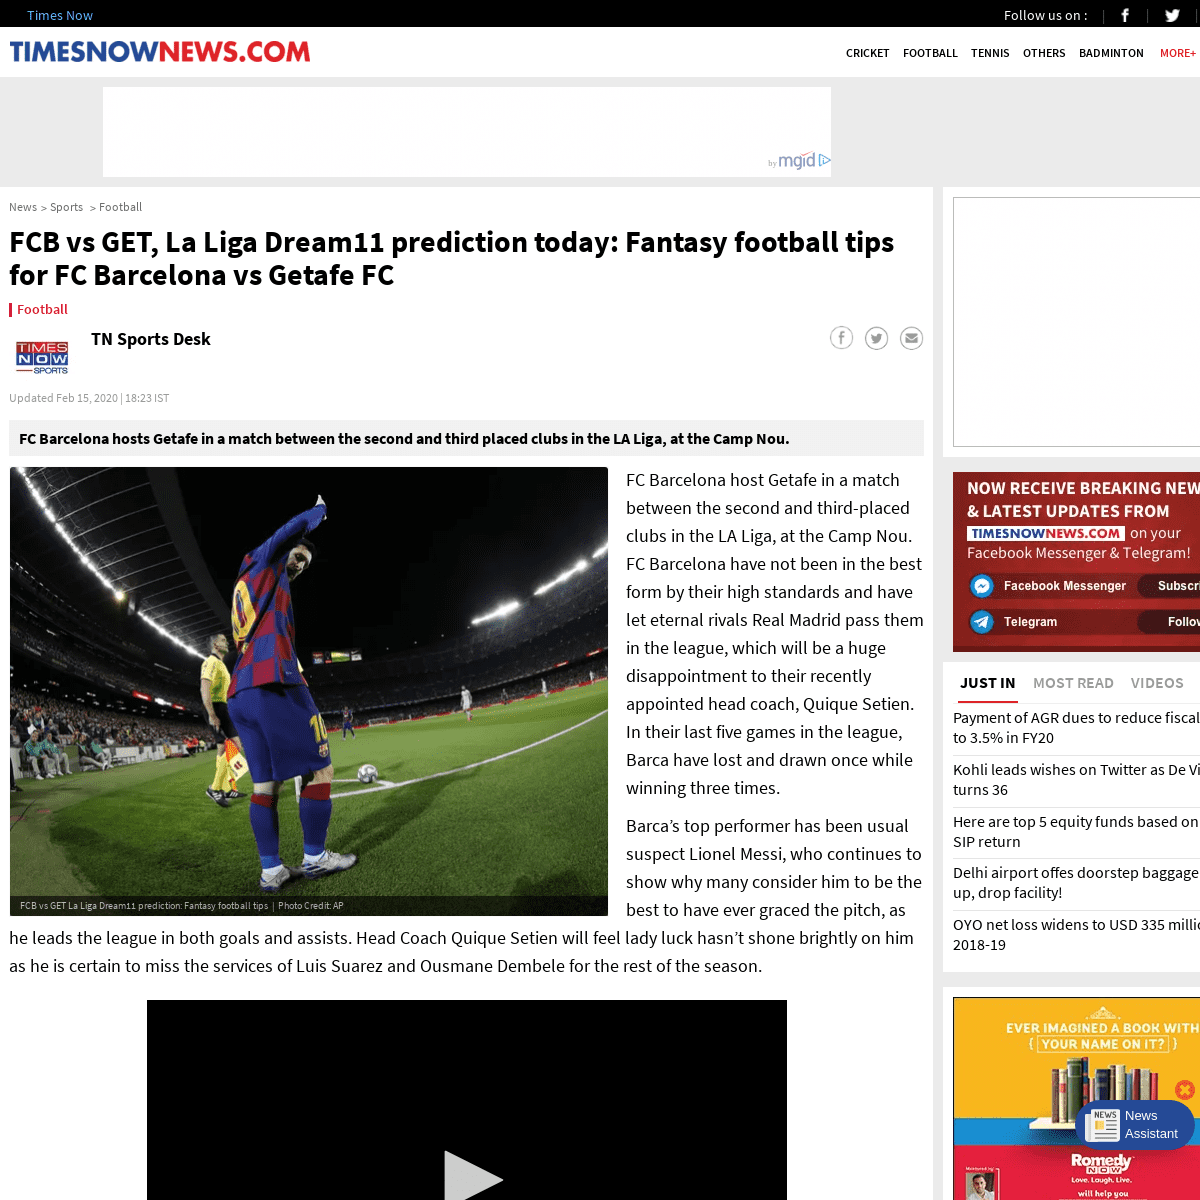 A complete backup of www.timesnownews.com/sports/football/article/fcb-vs-get-dream11-team-prediction-fc-barcelona-vs-getafe-fc-p